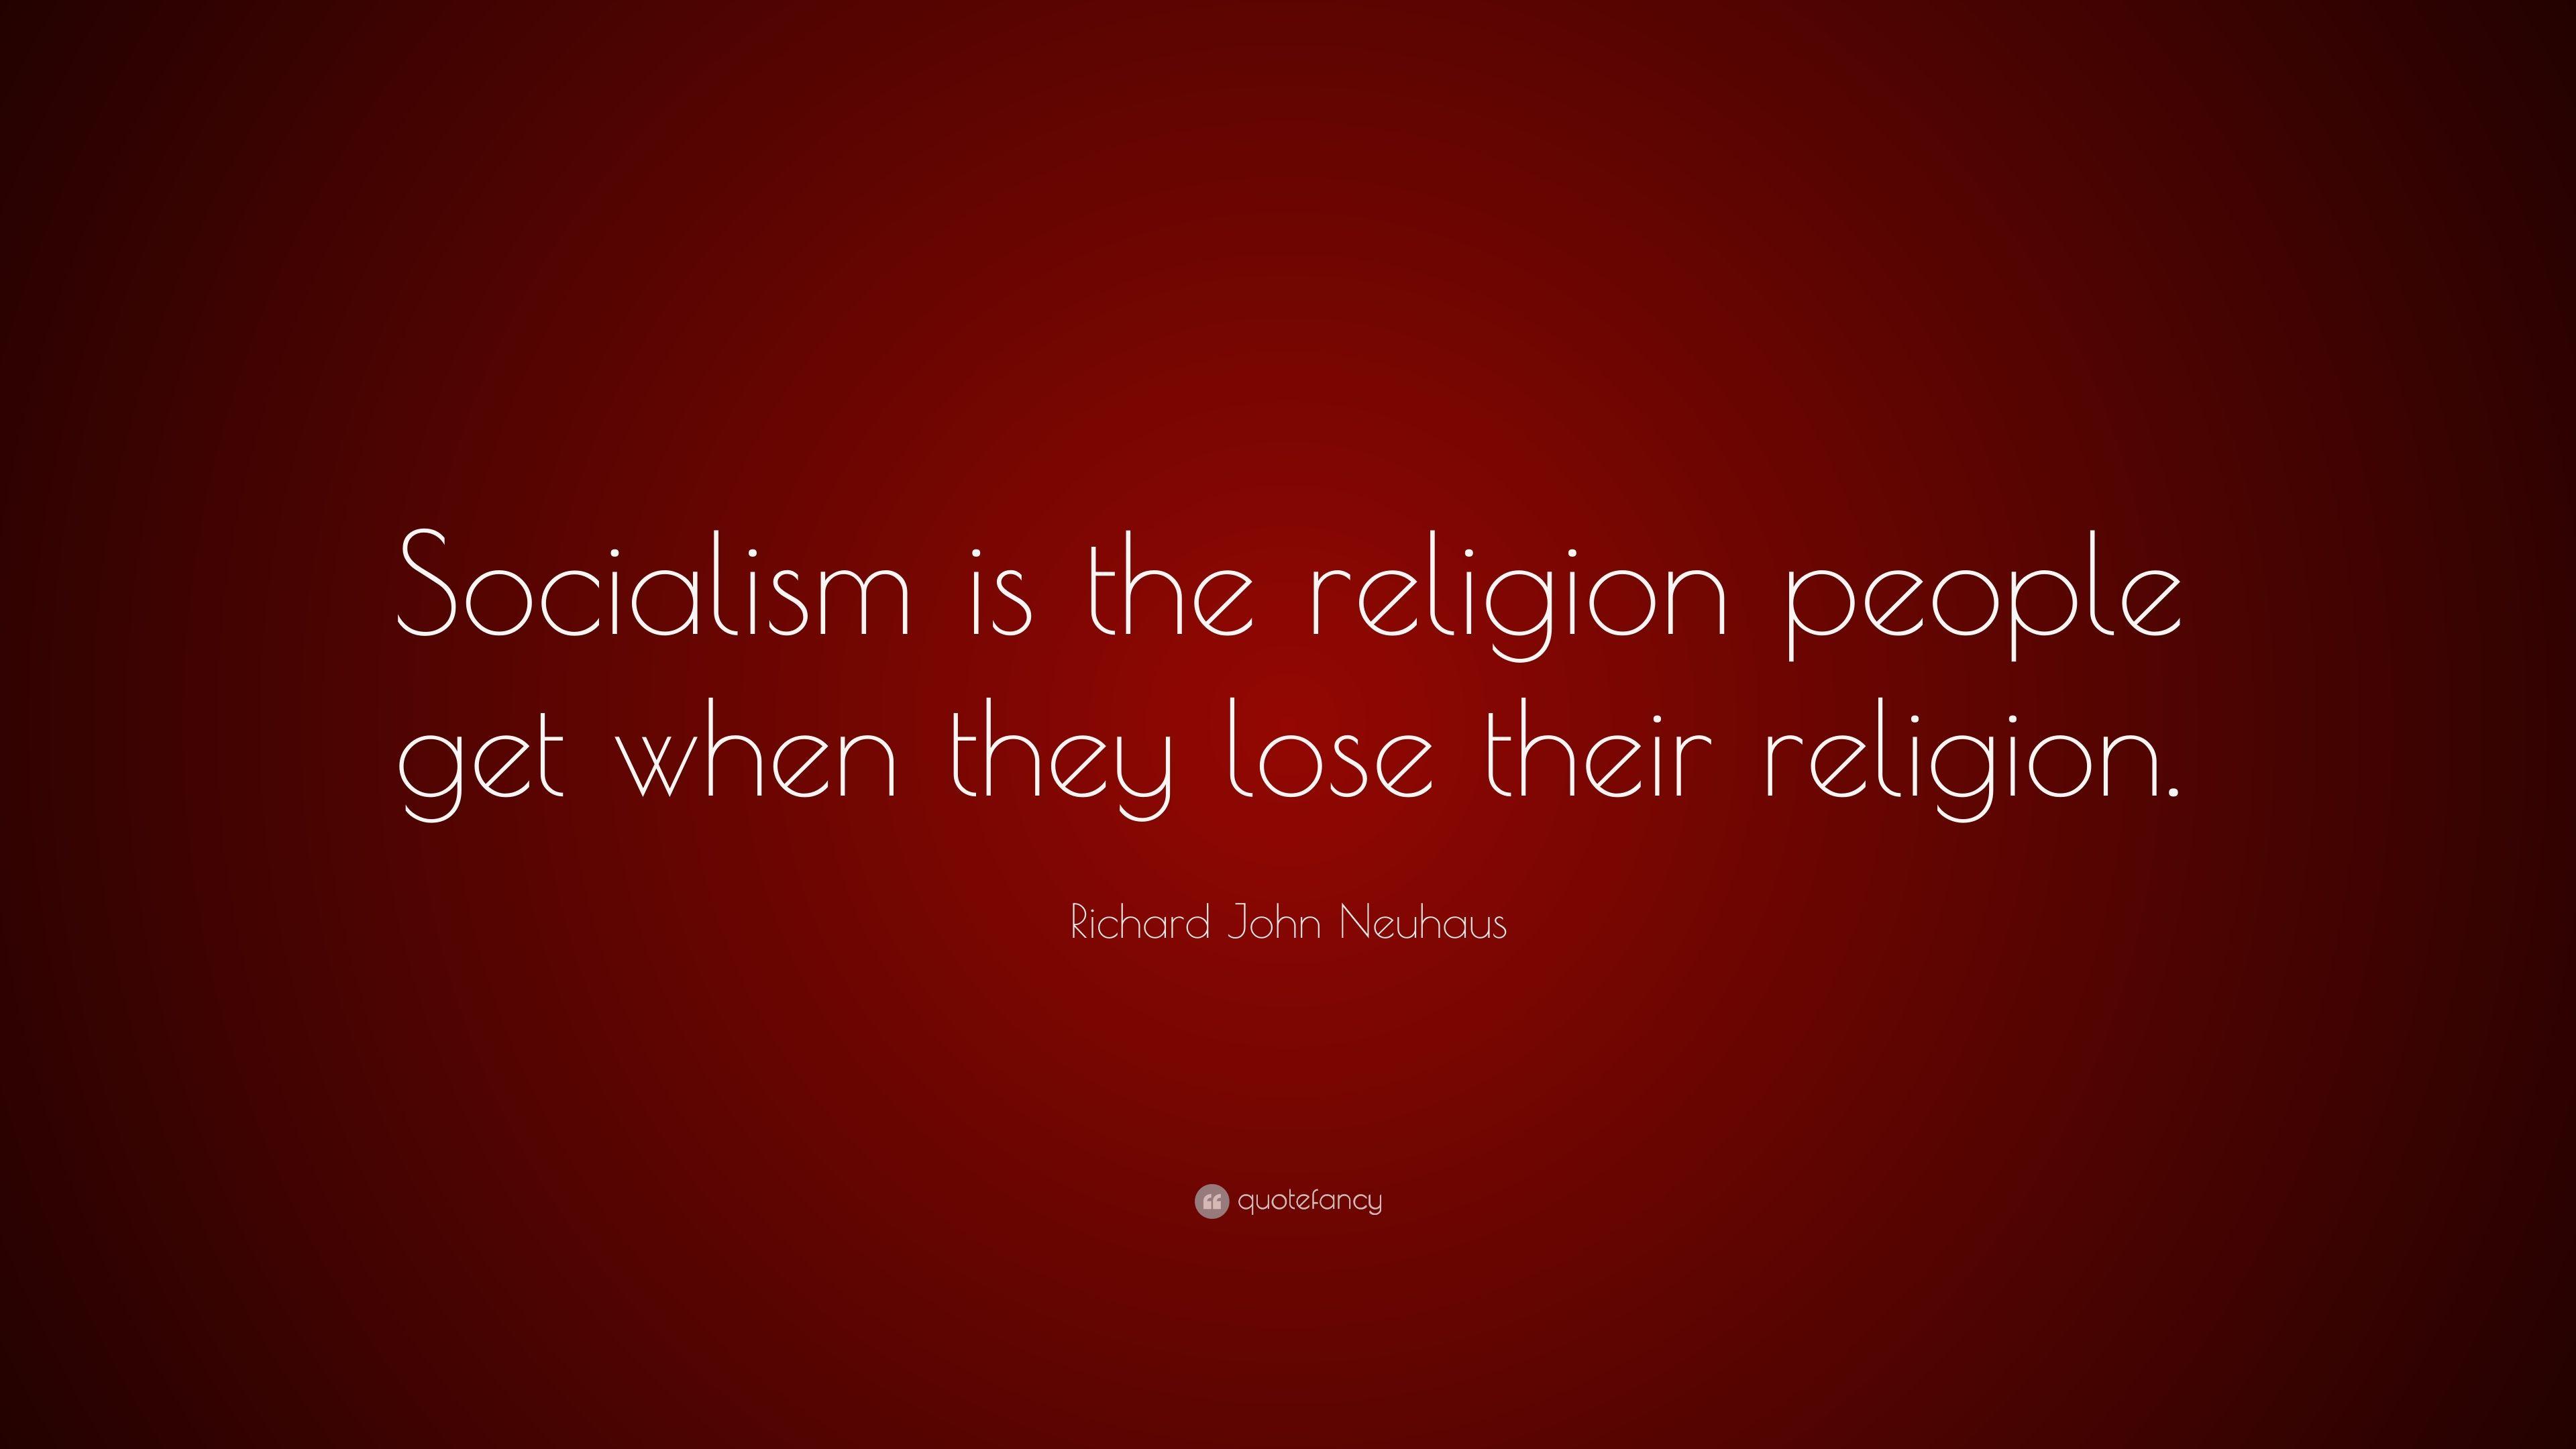 Richard John Neuhaus Quote: “Socialism is the religion people get